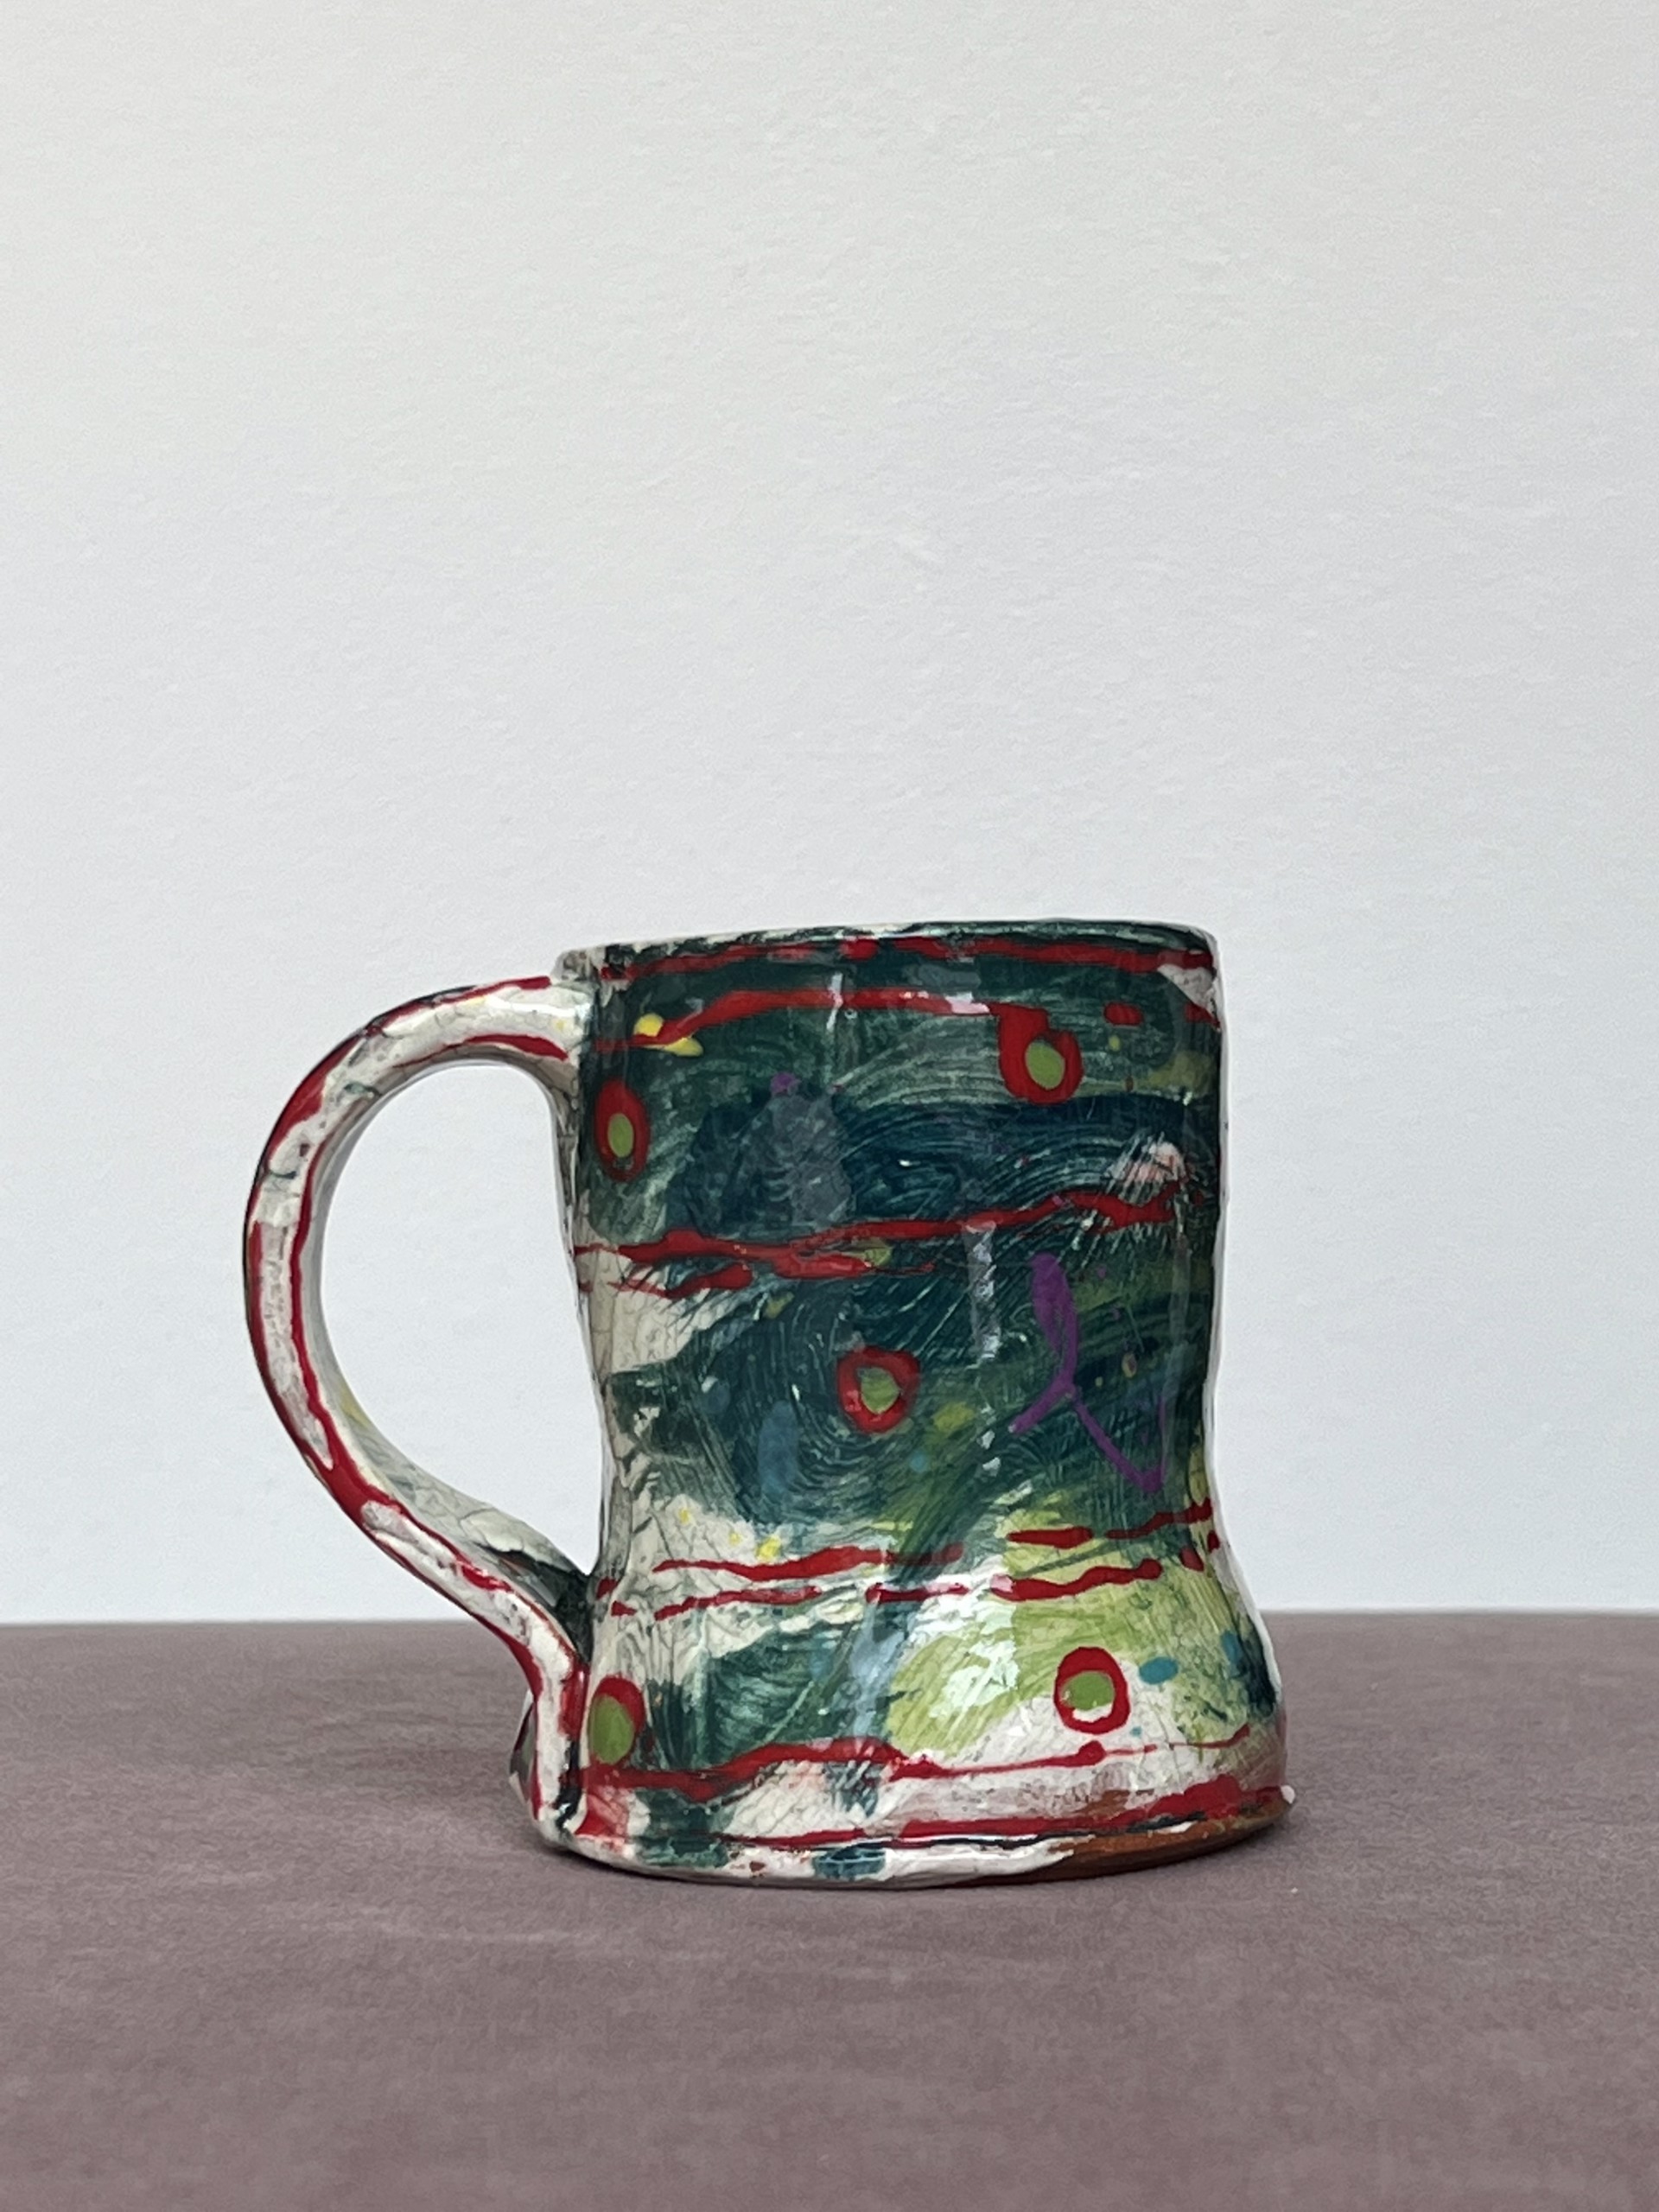 Teal & Red Mug No. 2 by Susan McGilvrey